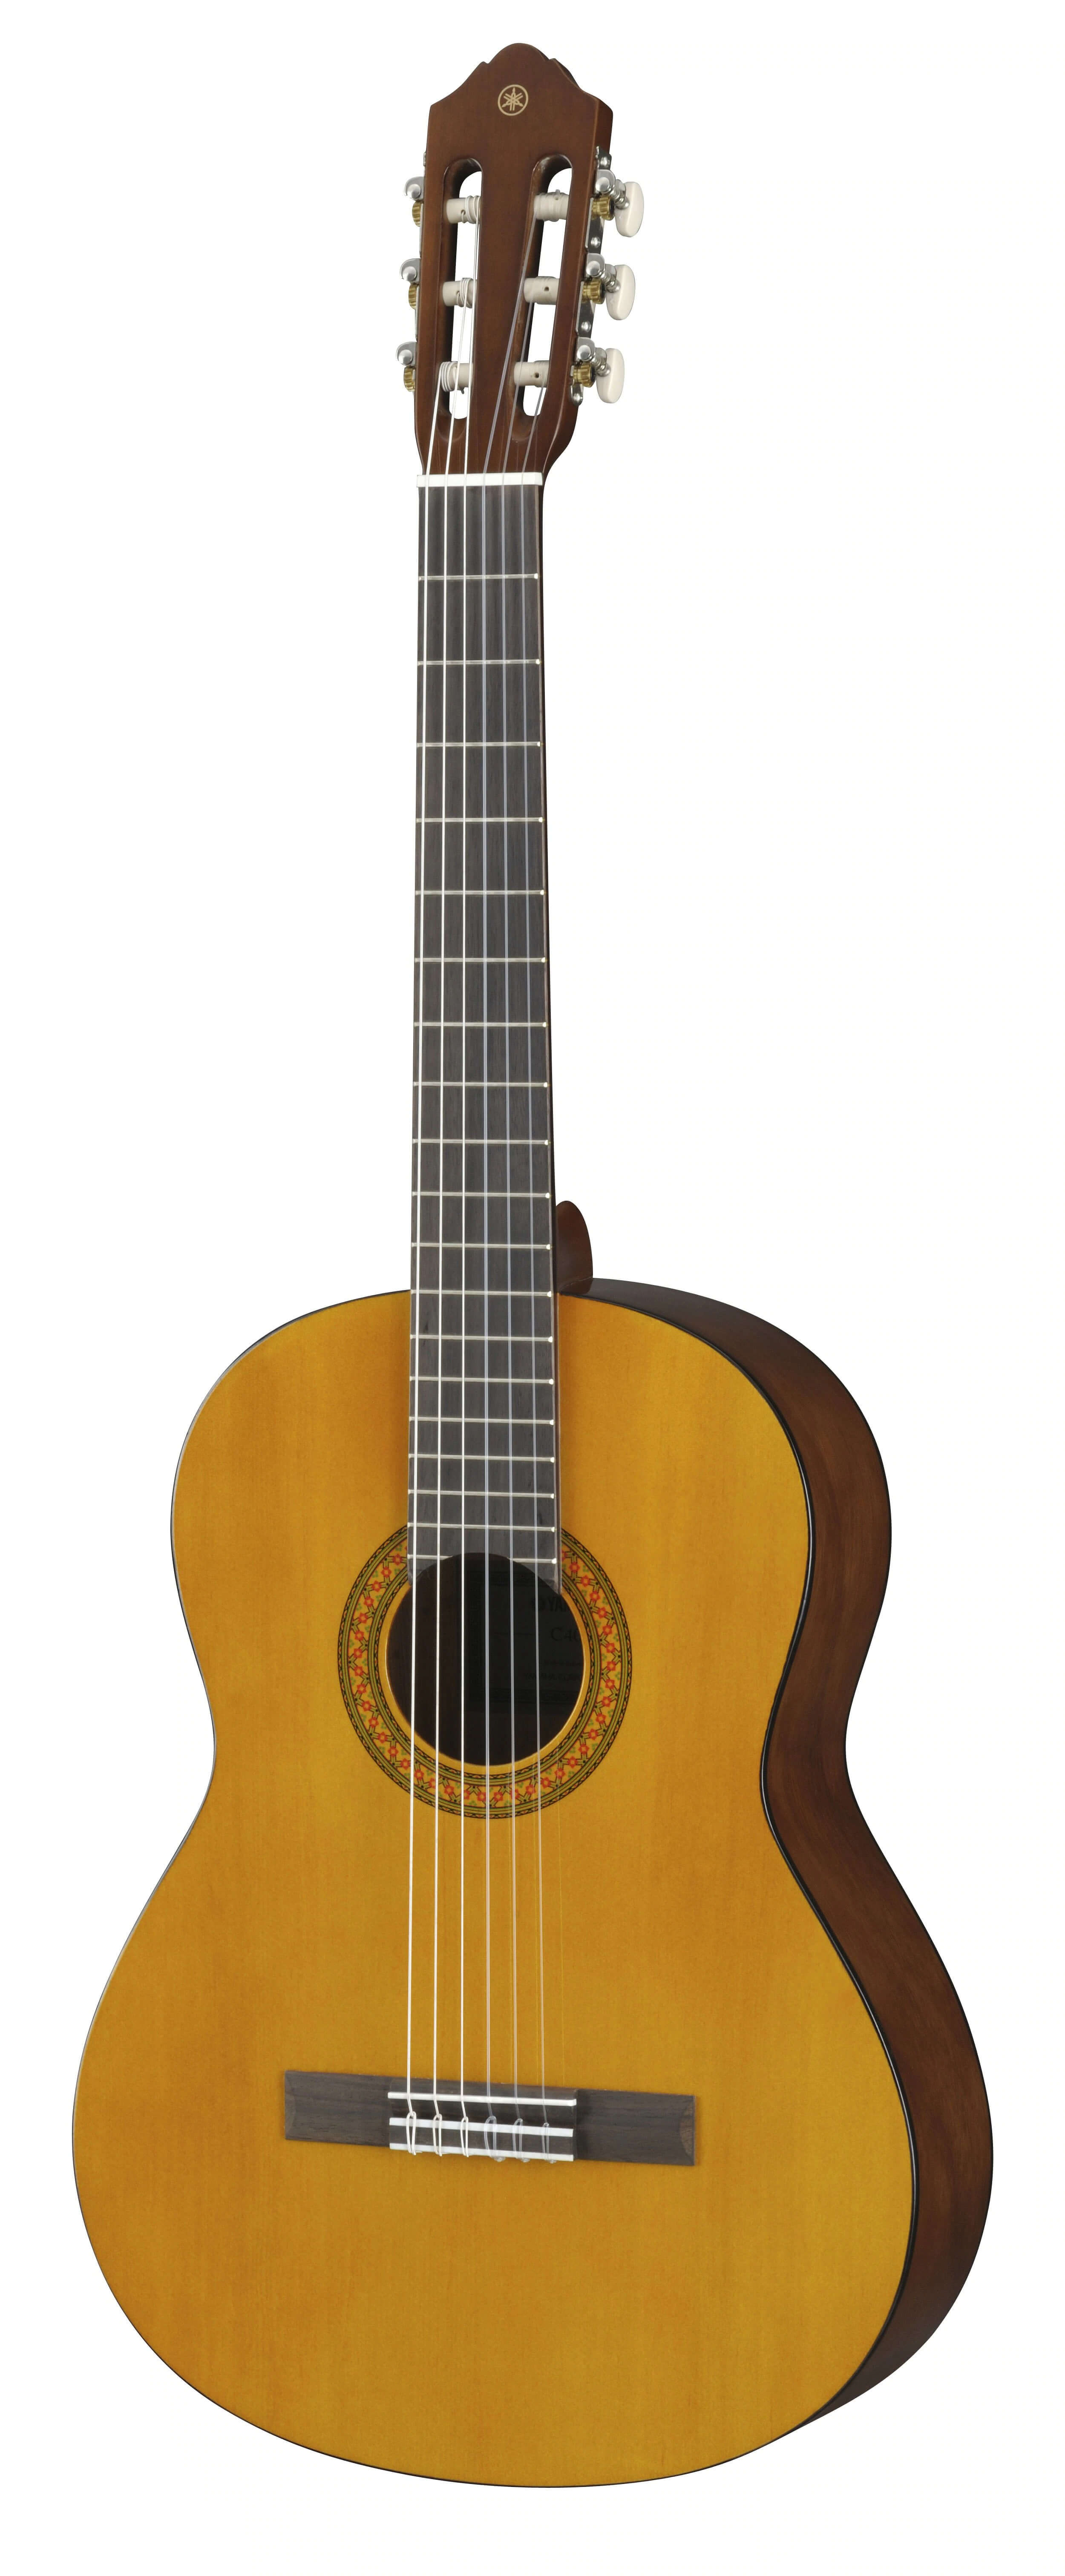 Is the Yamaha C40 a good guitar for - Guitar